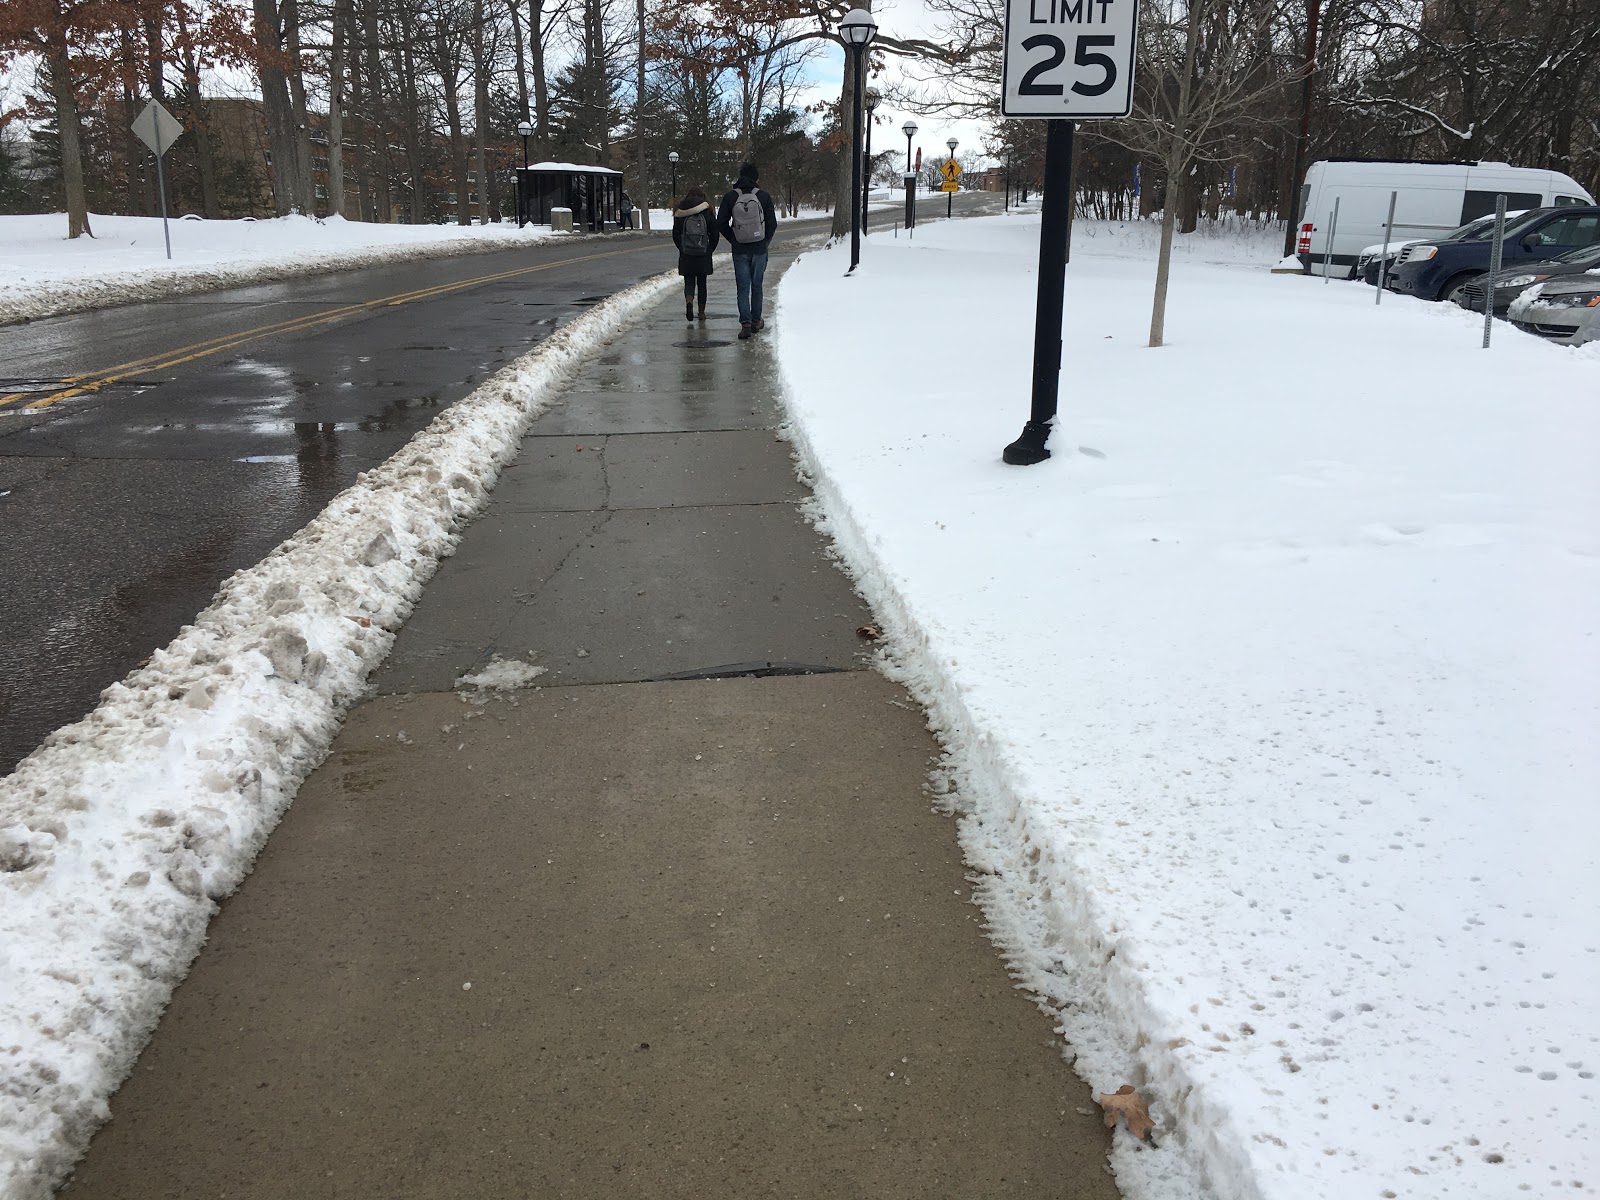 People walking on the sidewalk after snowfall